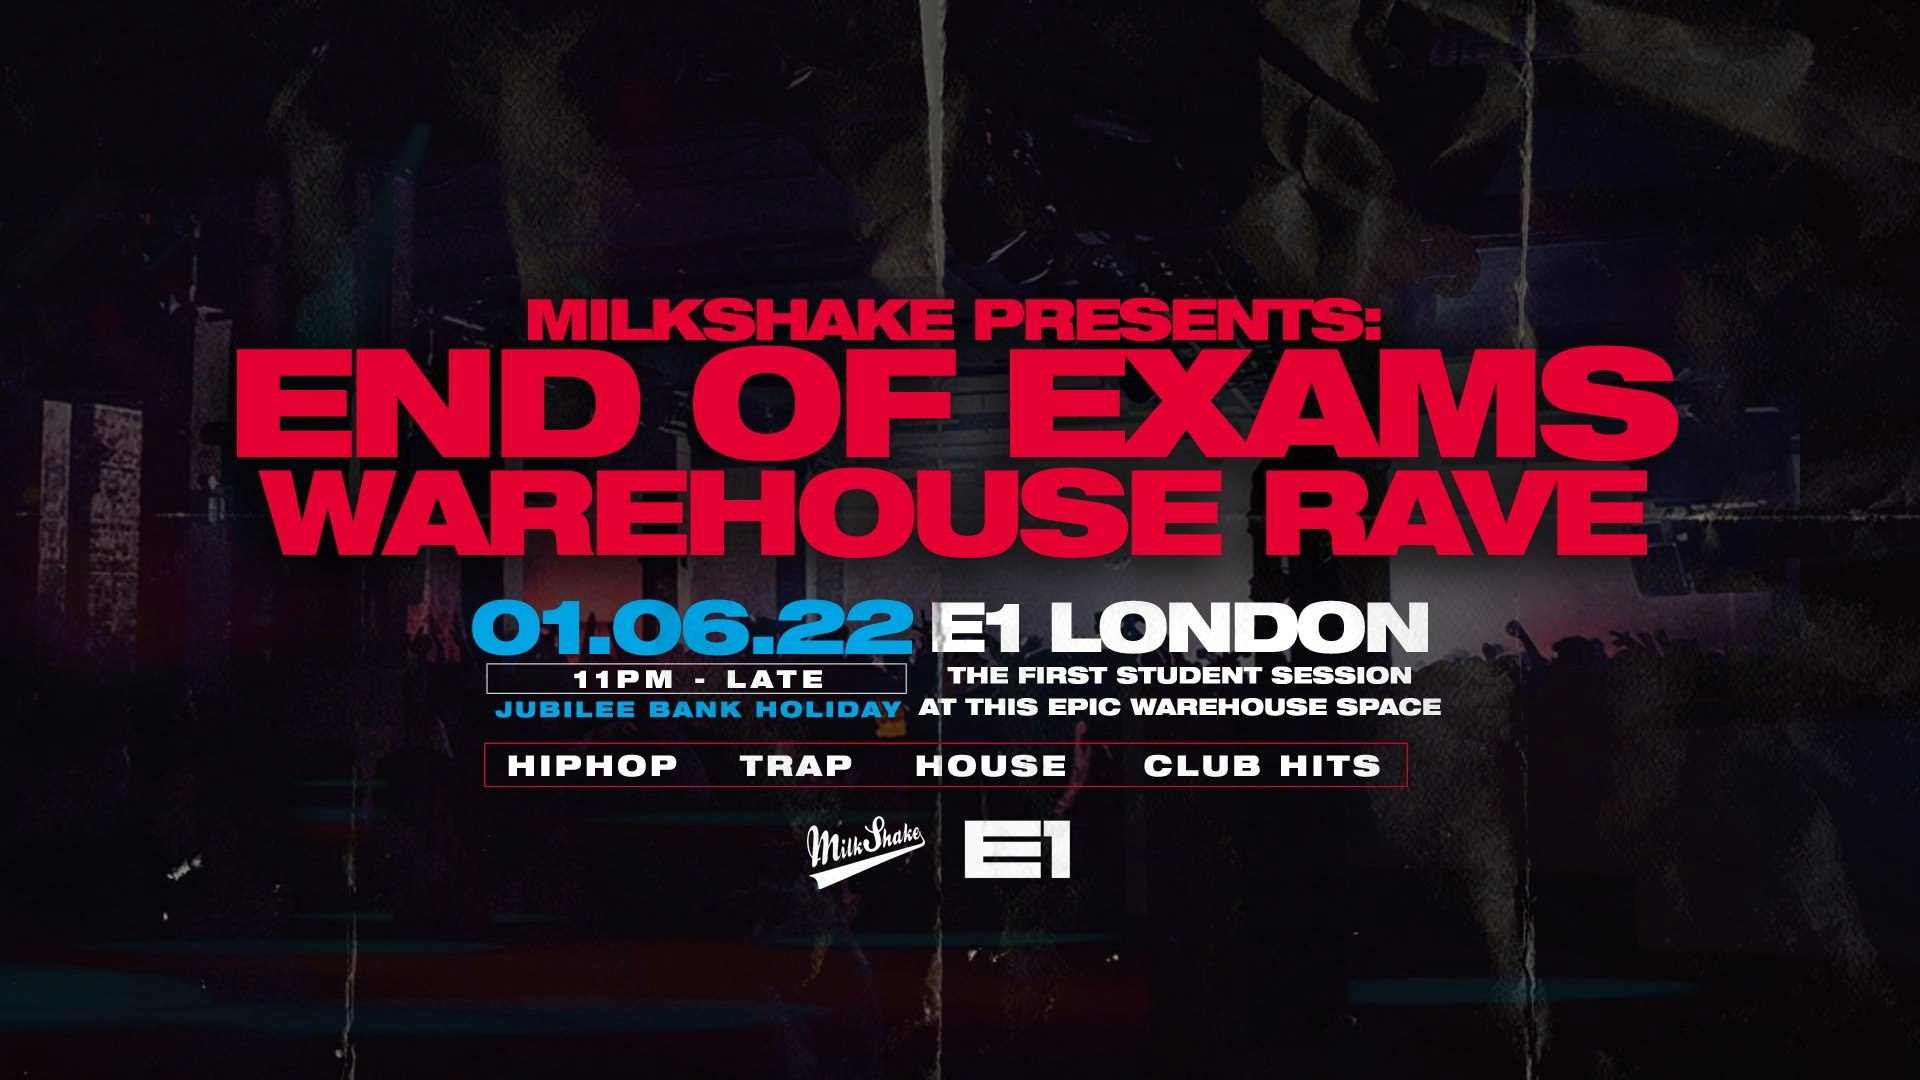 The End Of Exams Warehouse Rave @ E1 London | Milkshake’s Biggest Event!